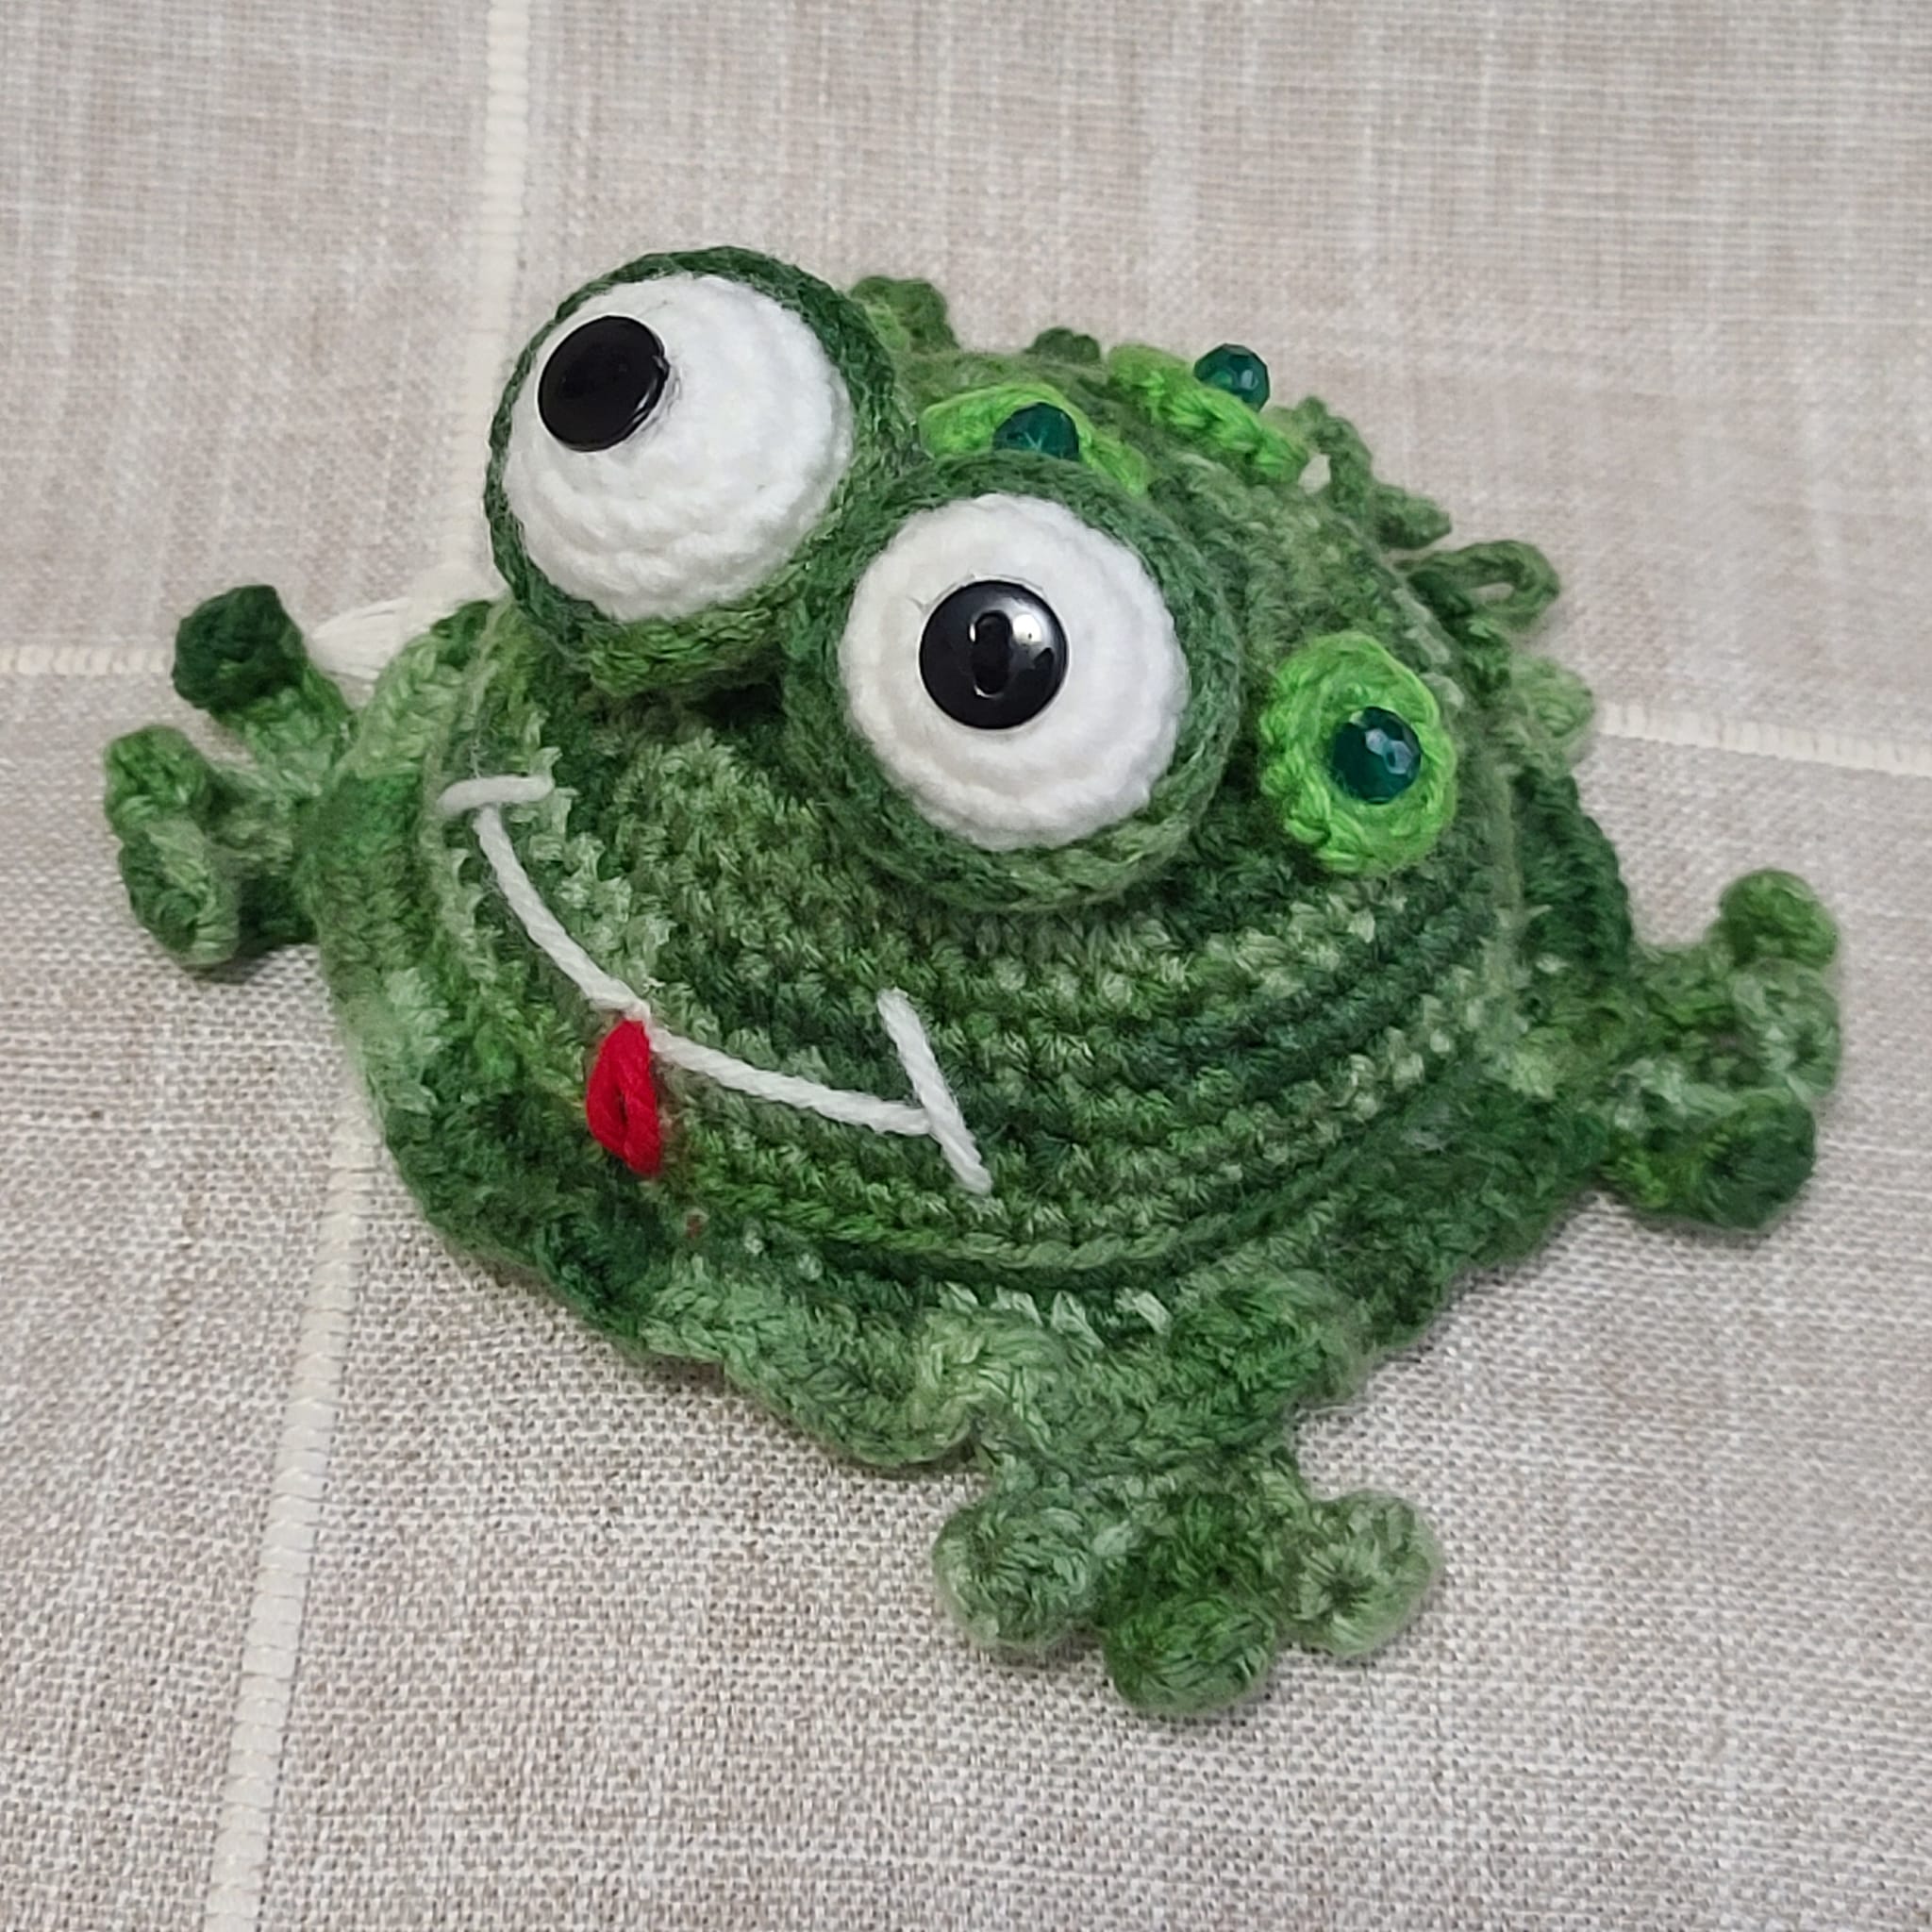 Crochet amigurumi handmade green frog - Click Image to Close